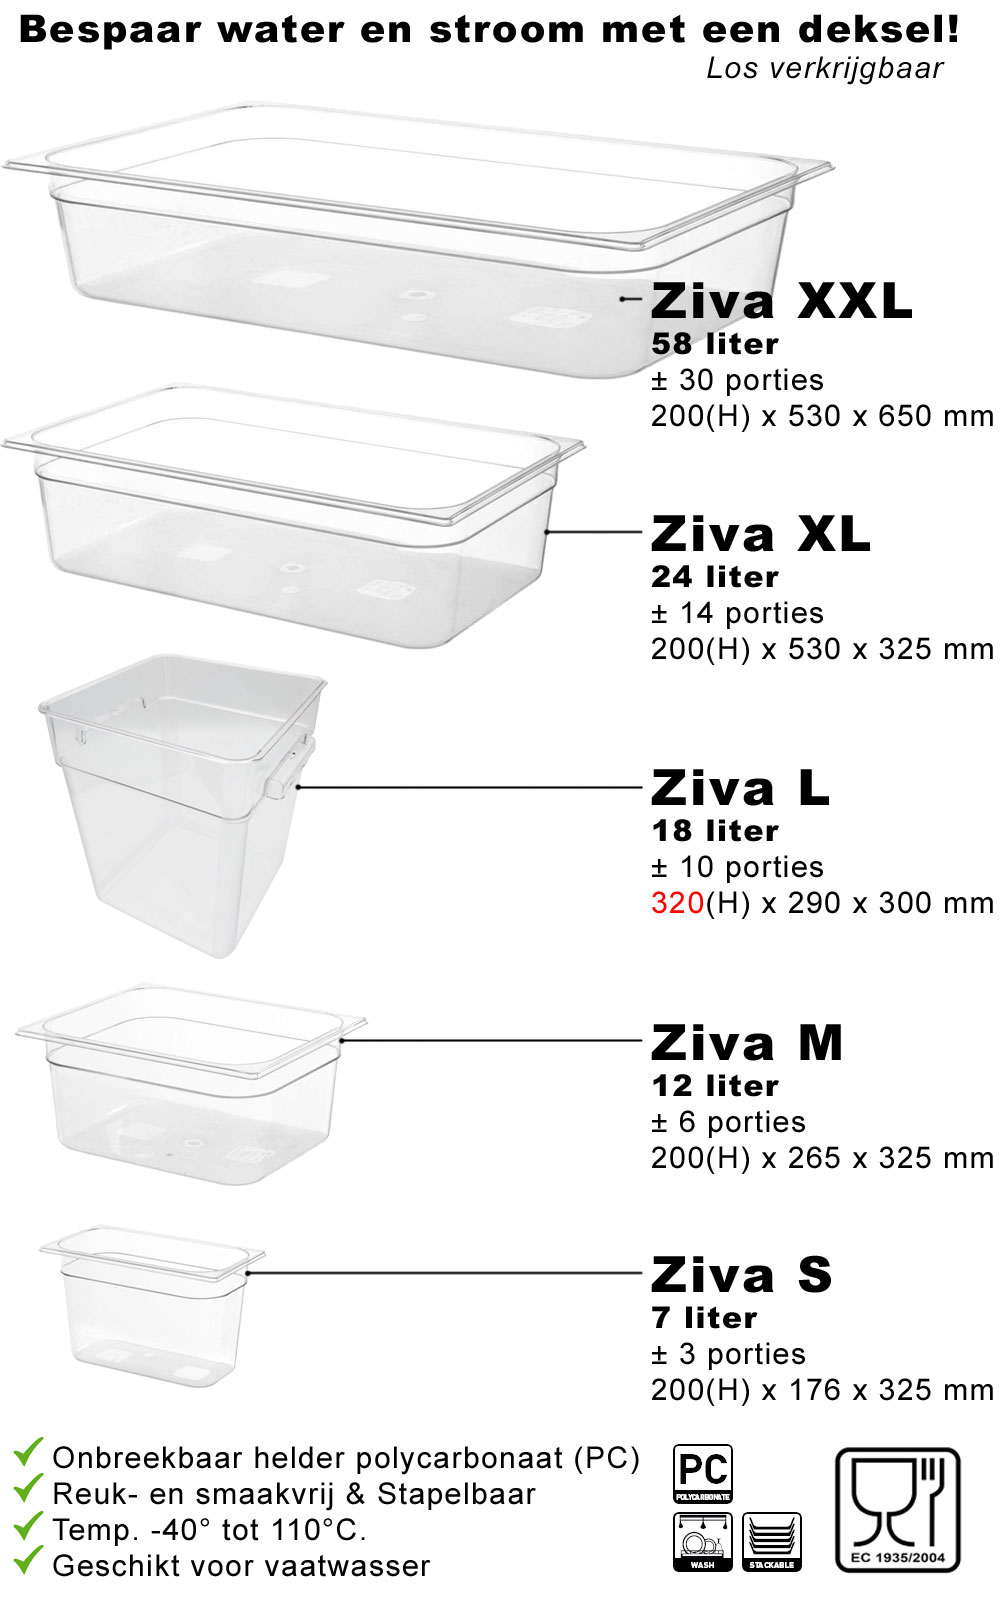 Ziva Sense + Ziva SlimTouch + 12 liter bundel